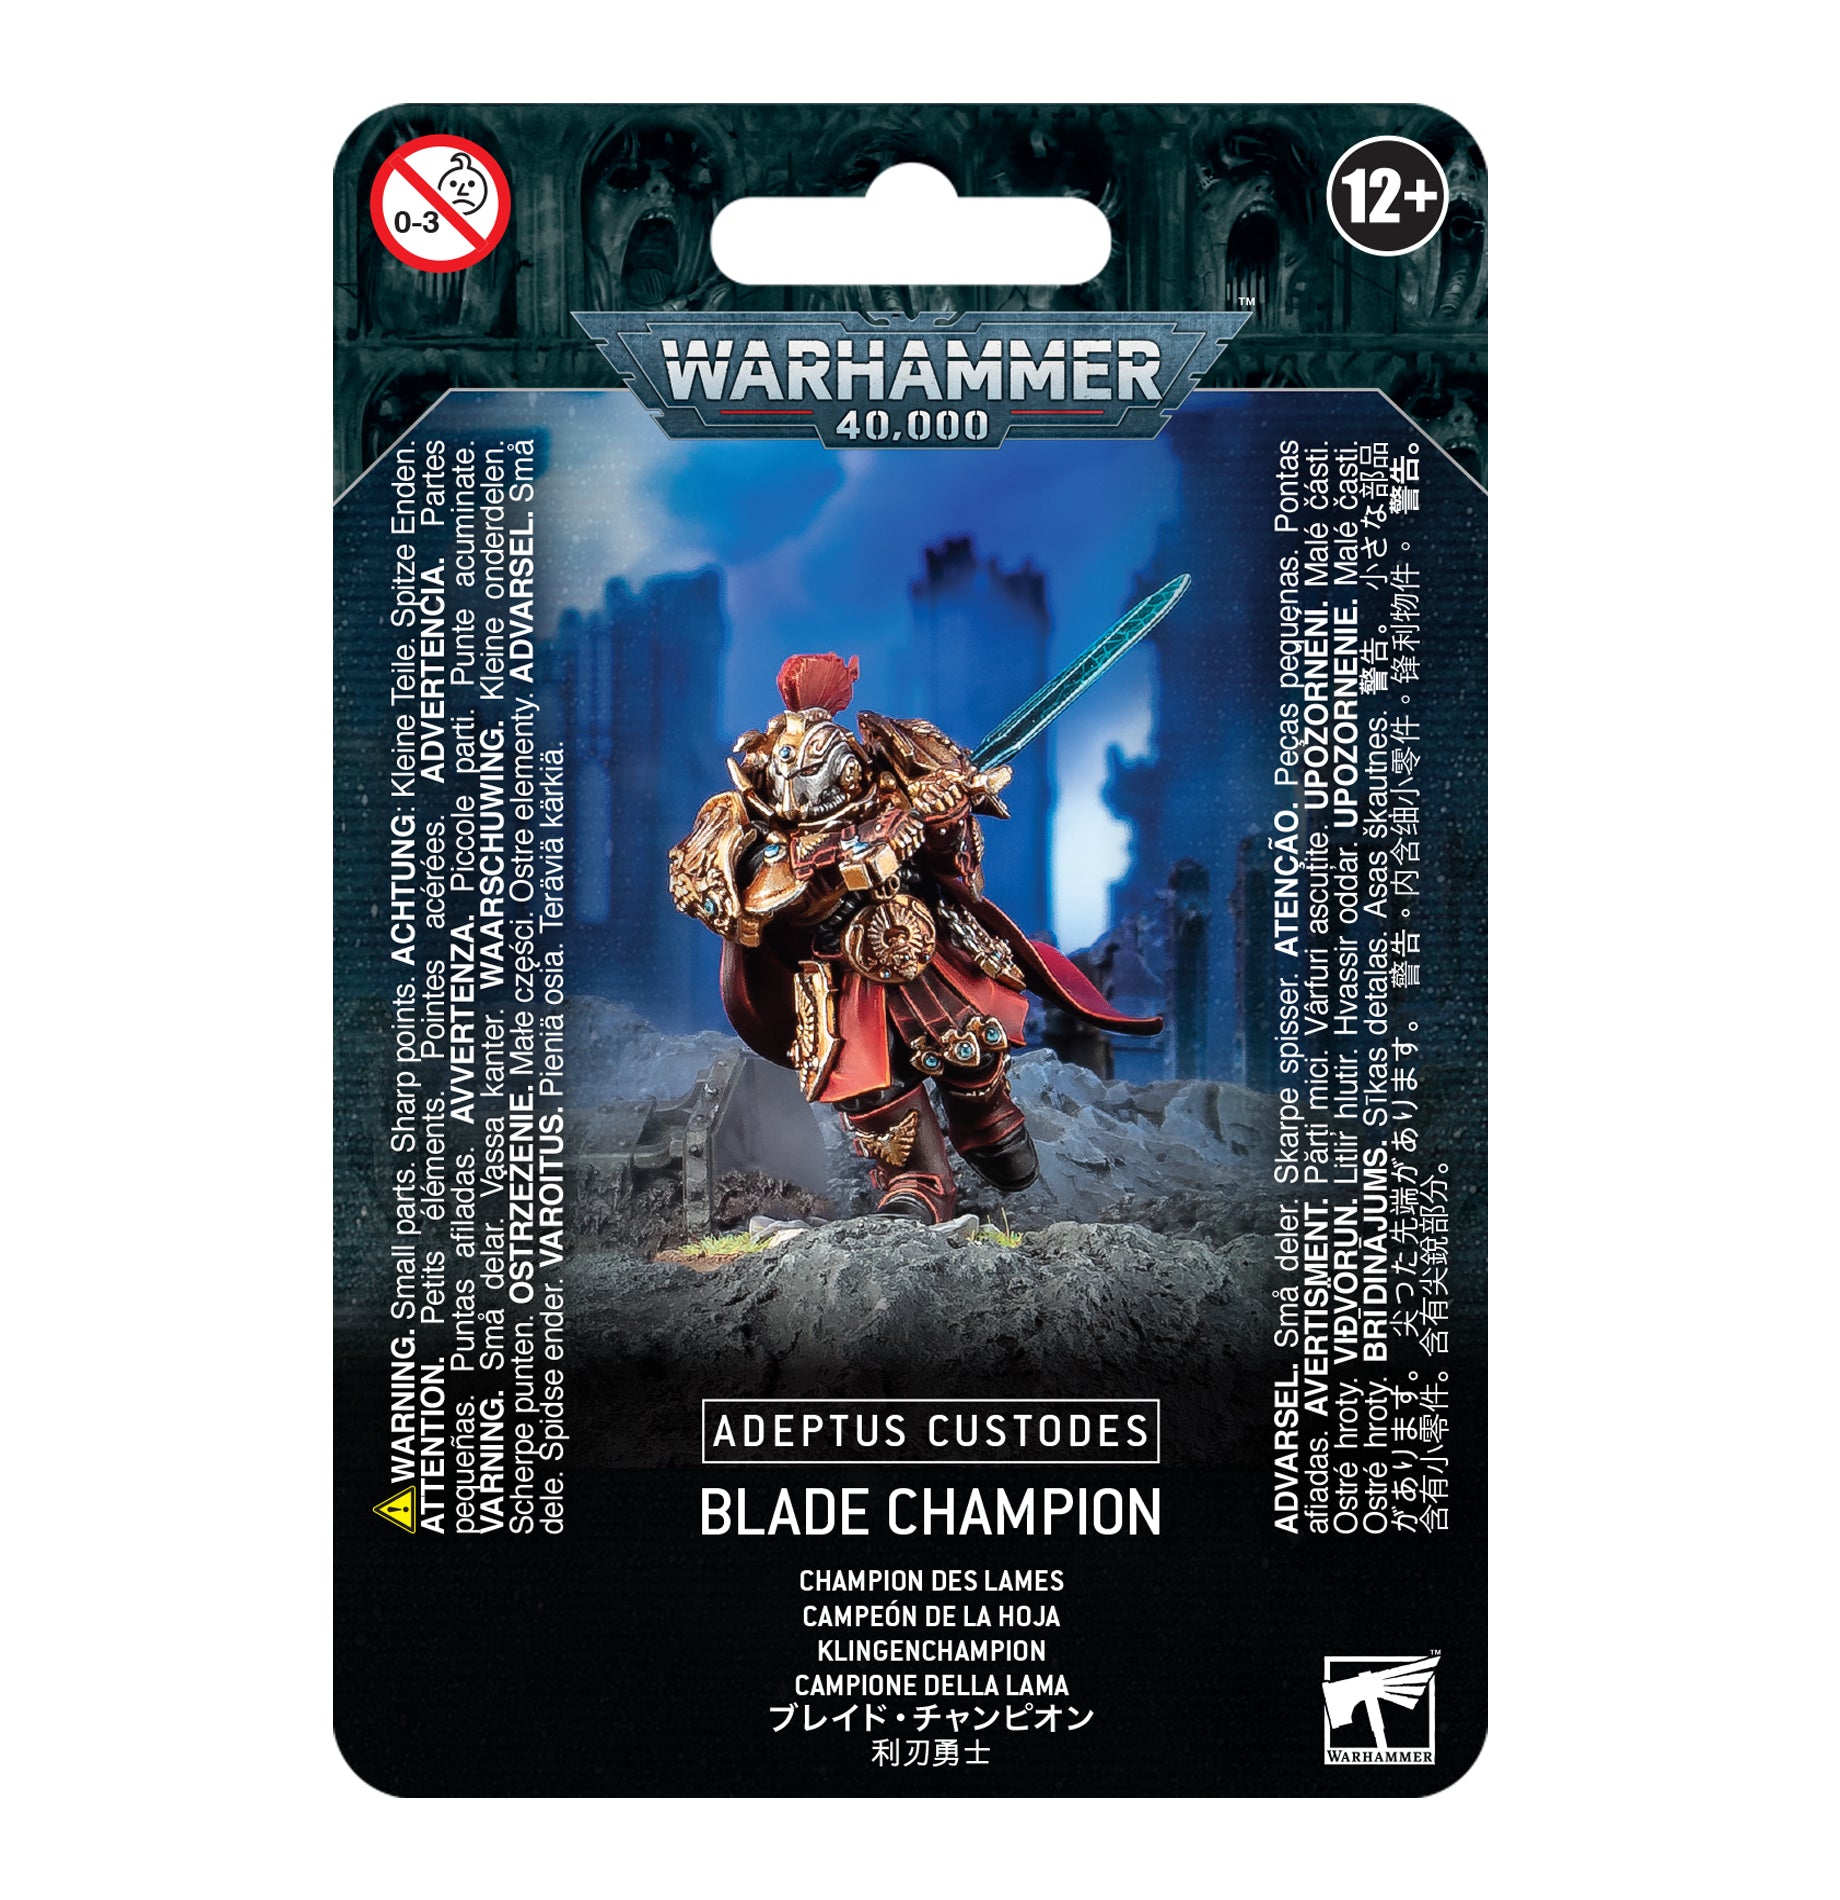 Warhammer 40k - Adeptus Custodes: Blade Champion - Bards & Cards